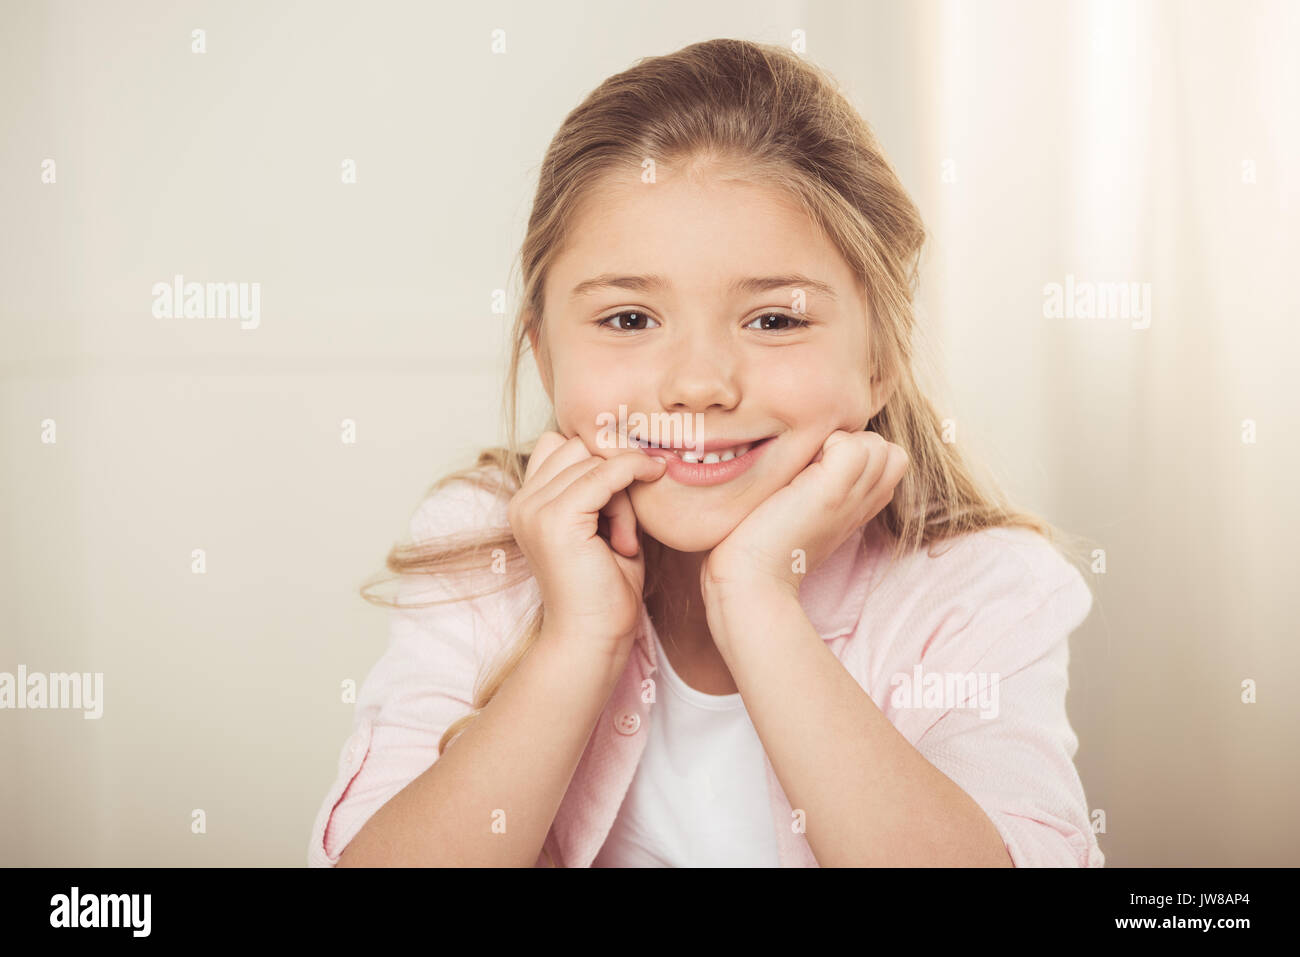 Close-up portrait of adorable petite fille smiling at camera Banque D'Images